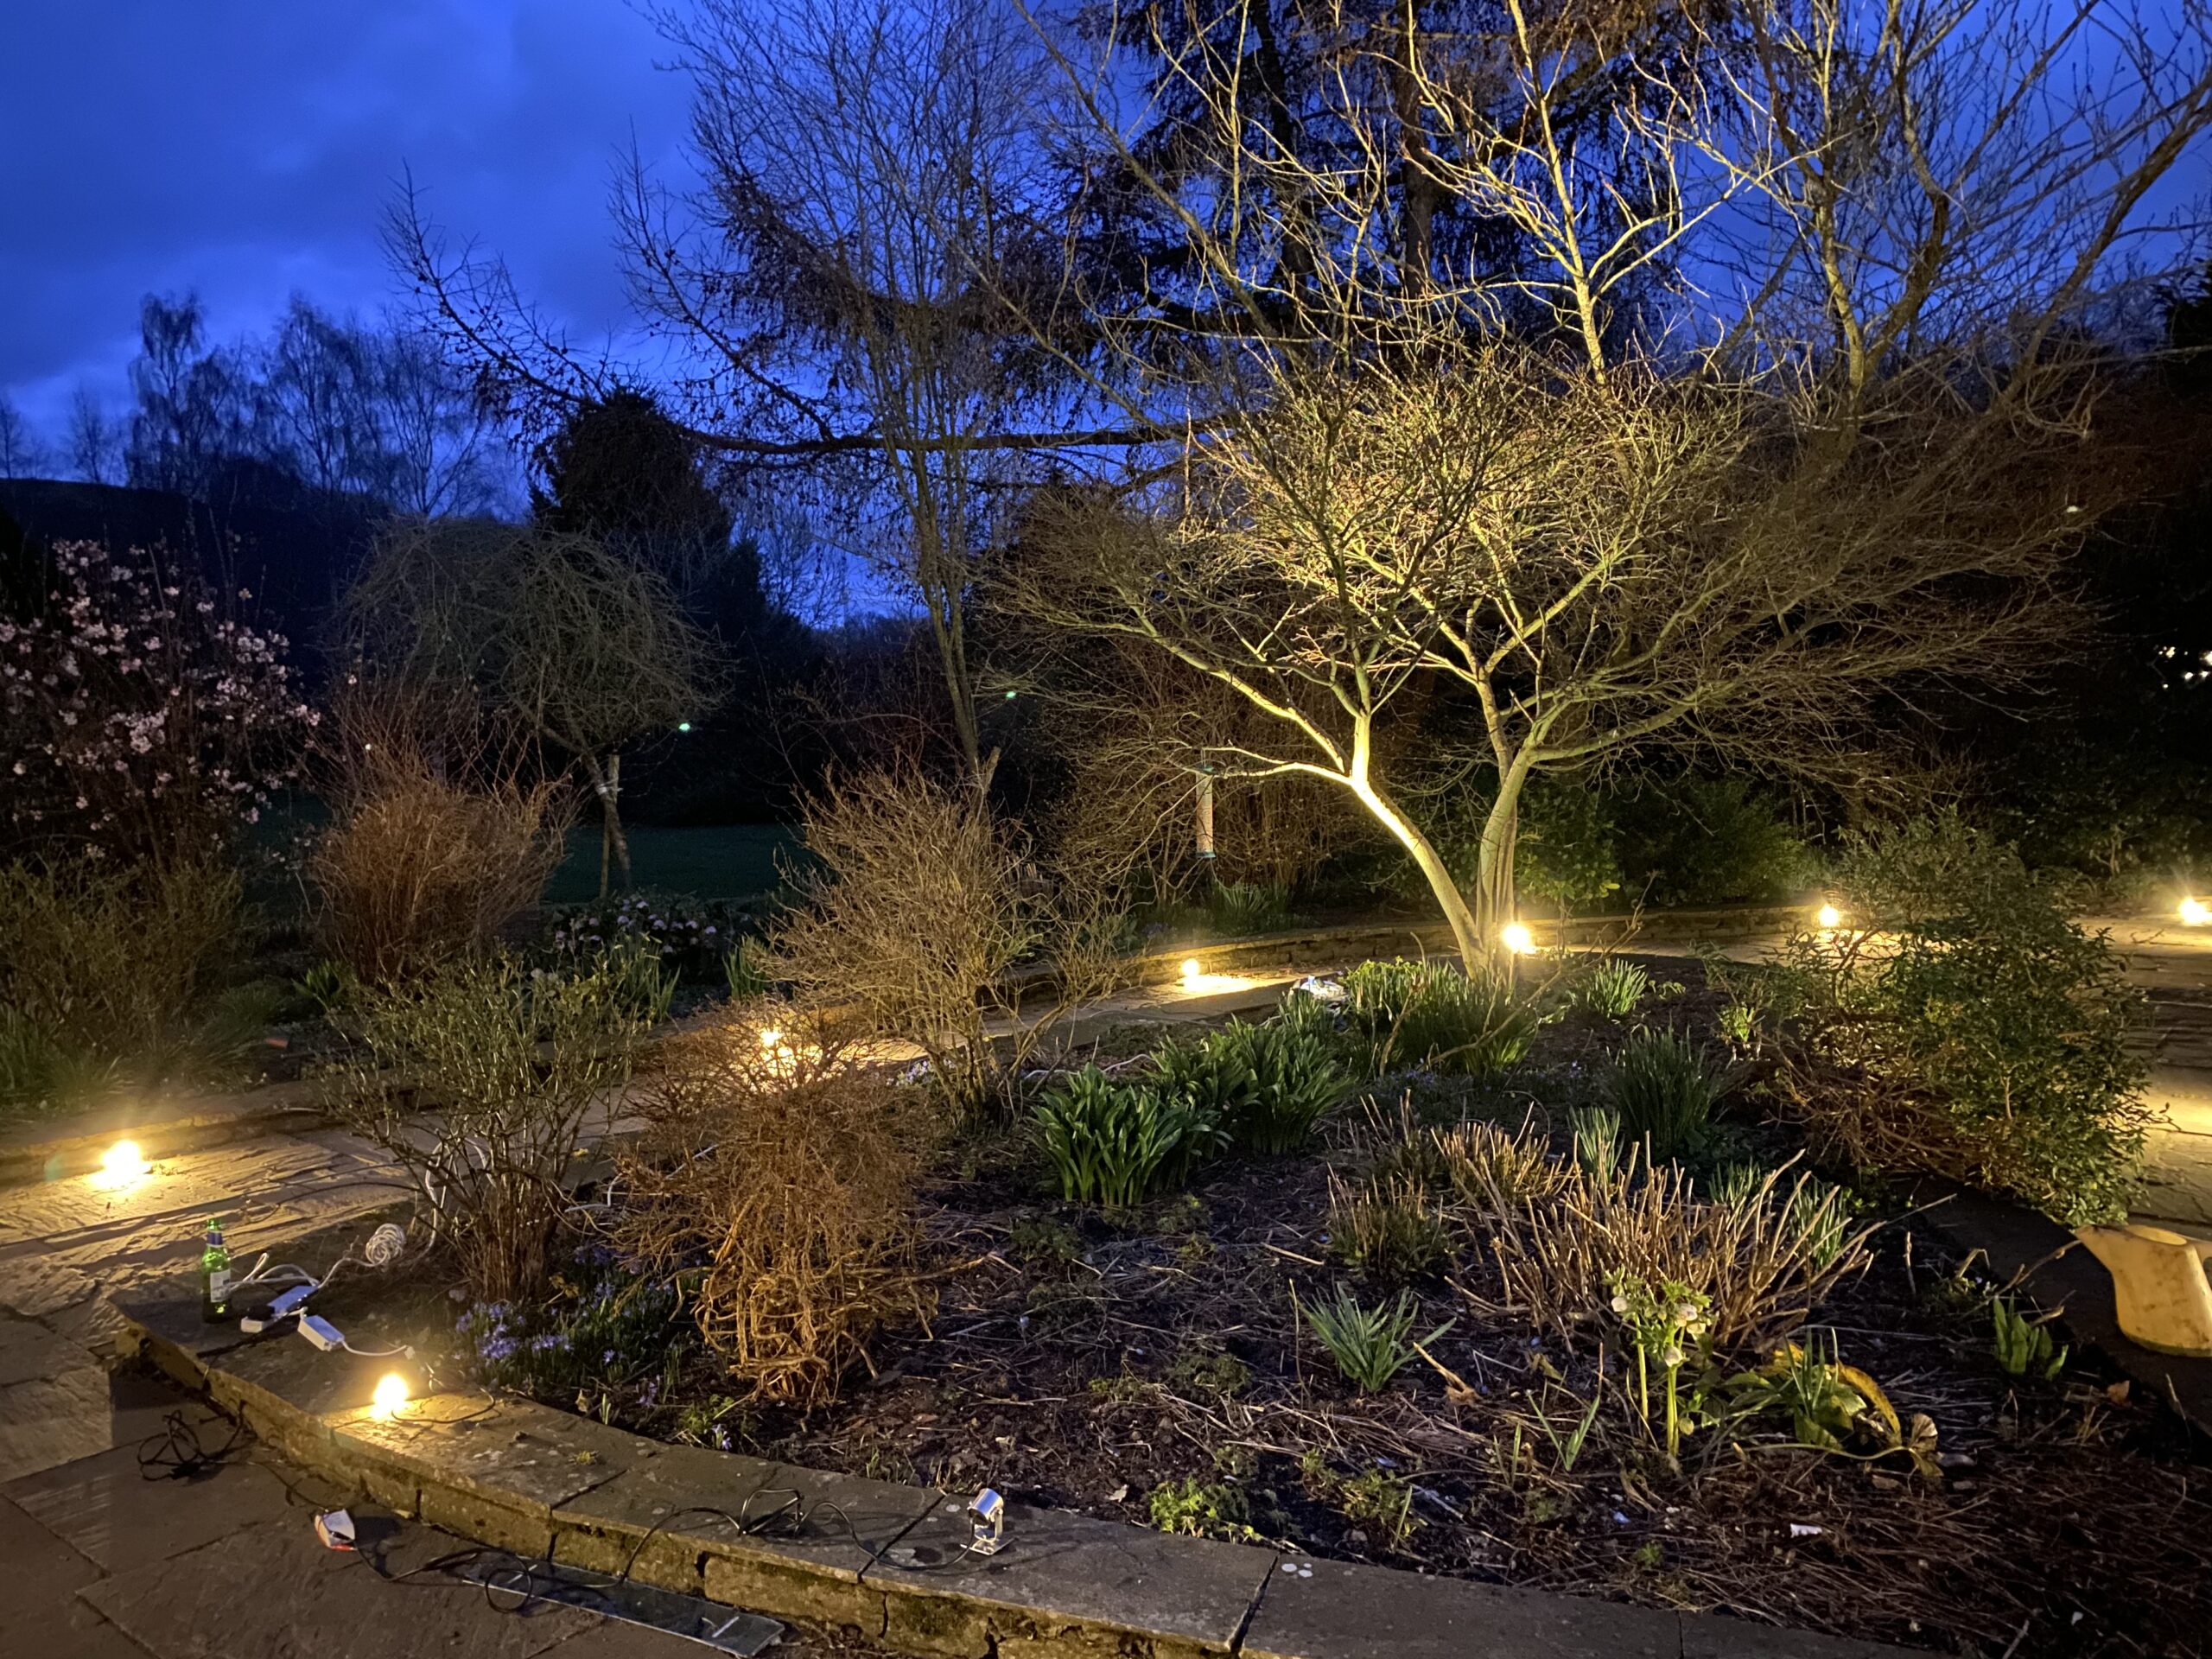 Ideas for garden lighting. A photo of a garden path illuminated at night